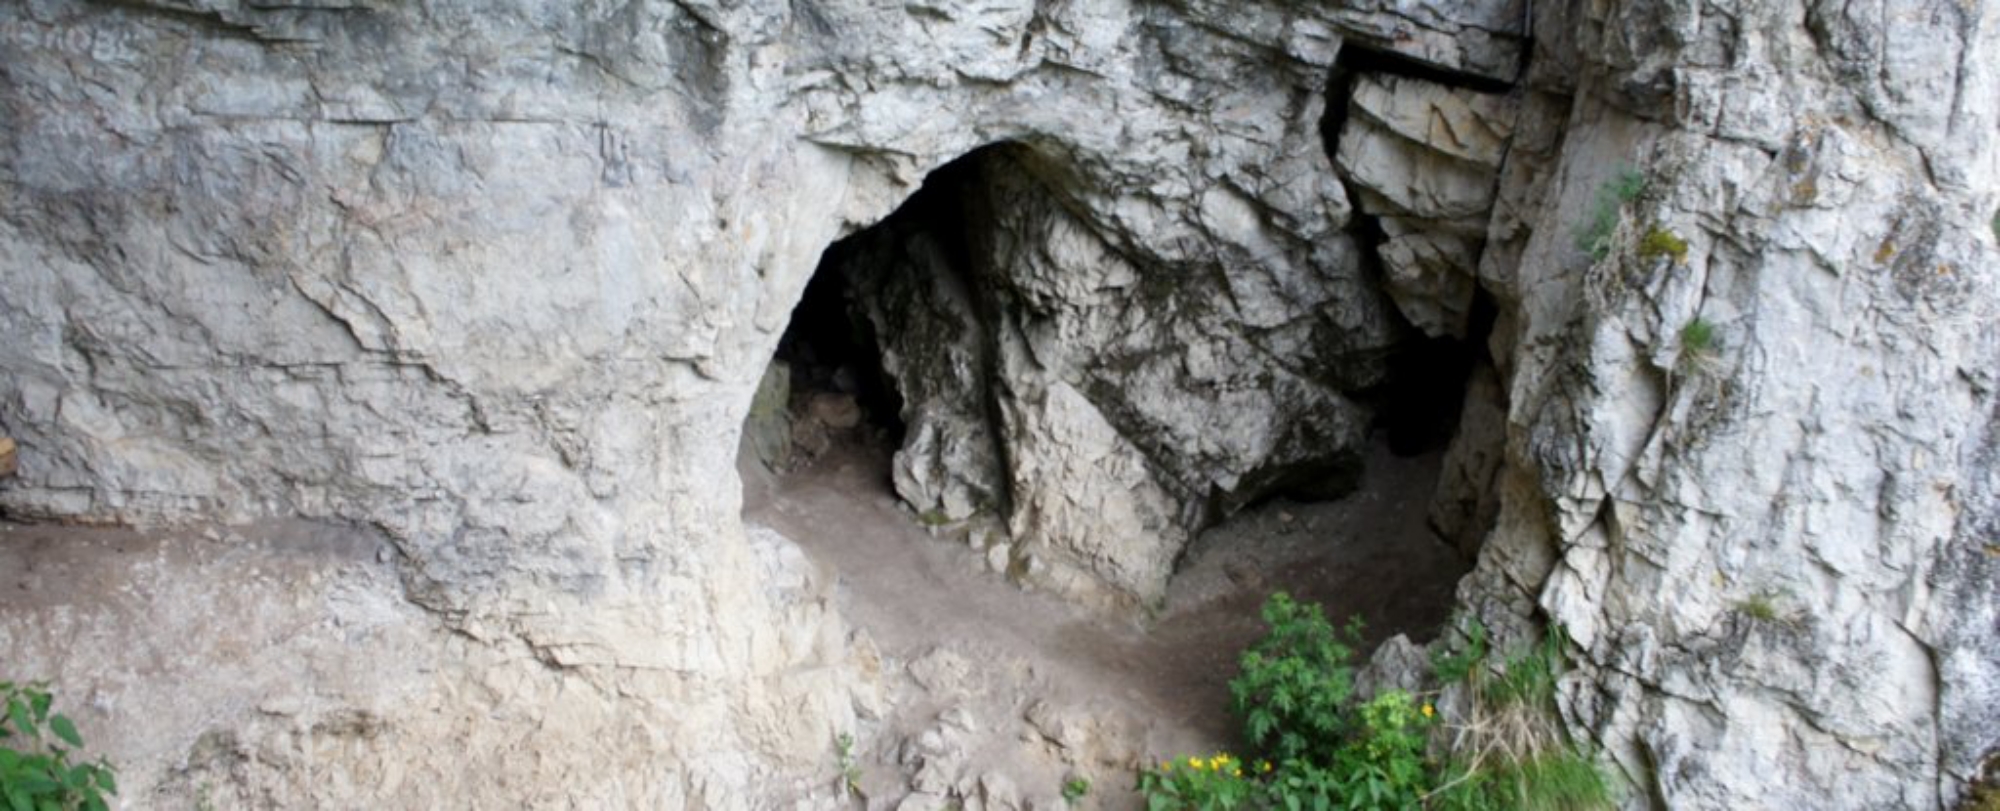 Caverna onde foi encontrado ancestral de seres humanos